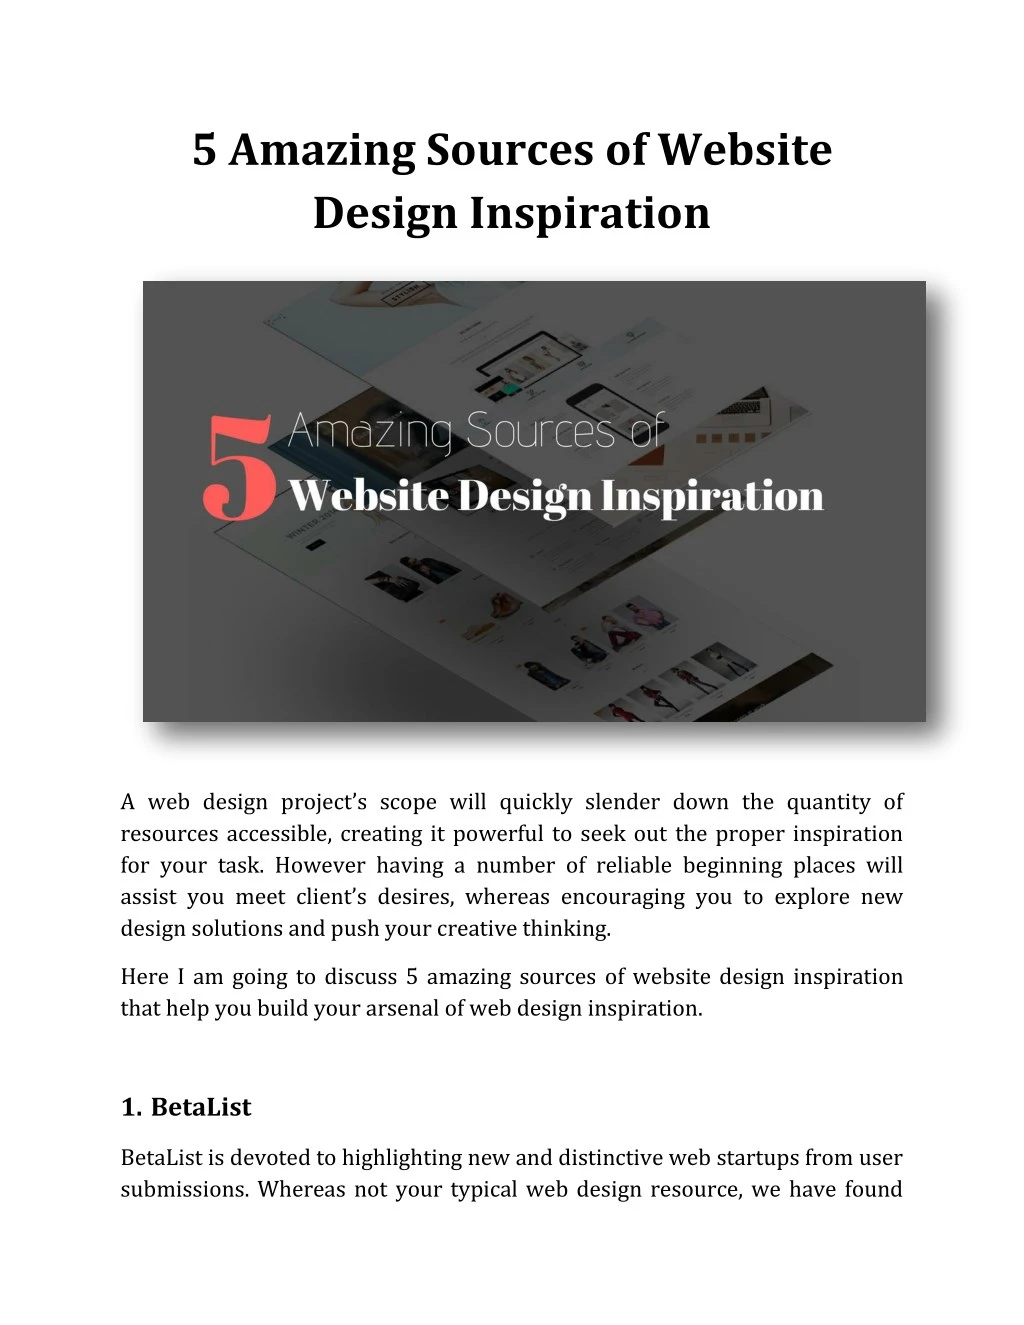 5 amazing sources of website design inspiration